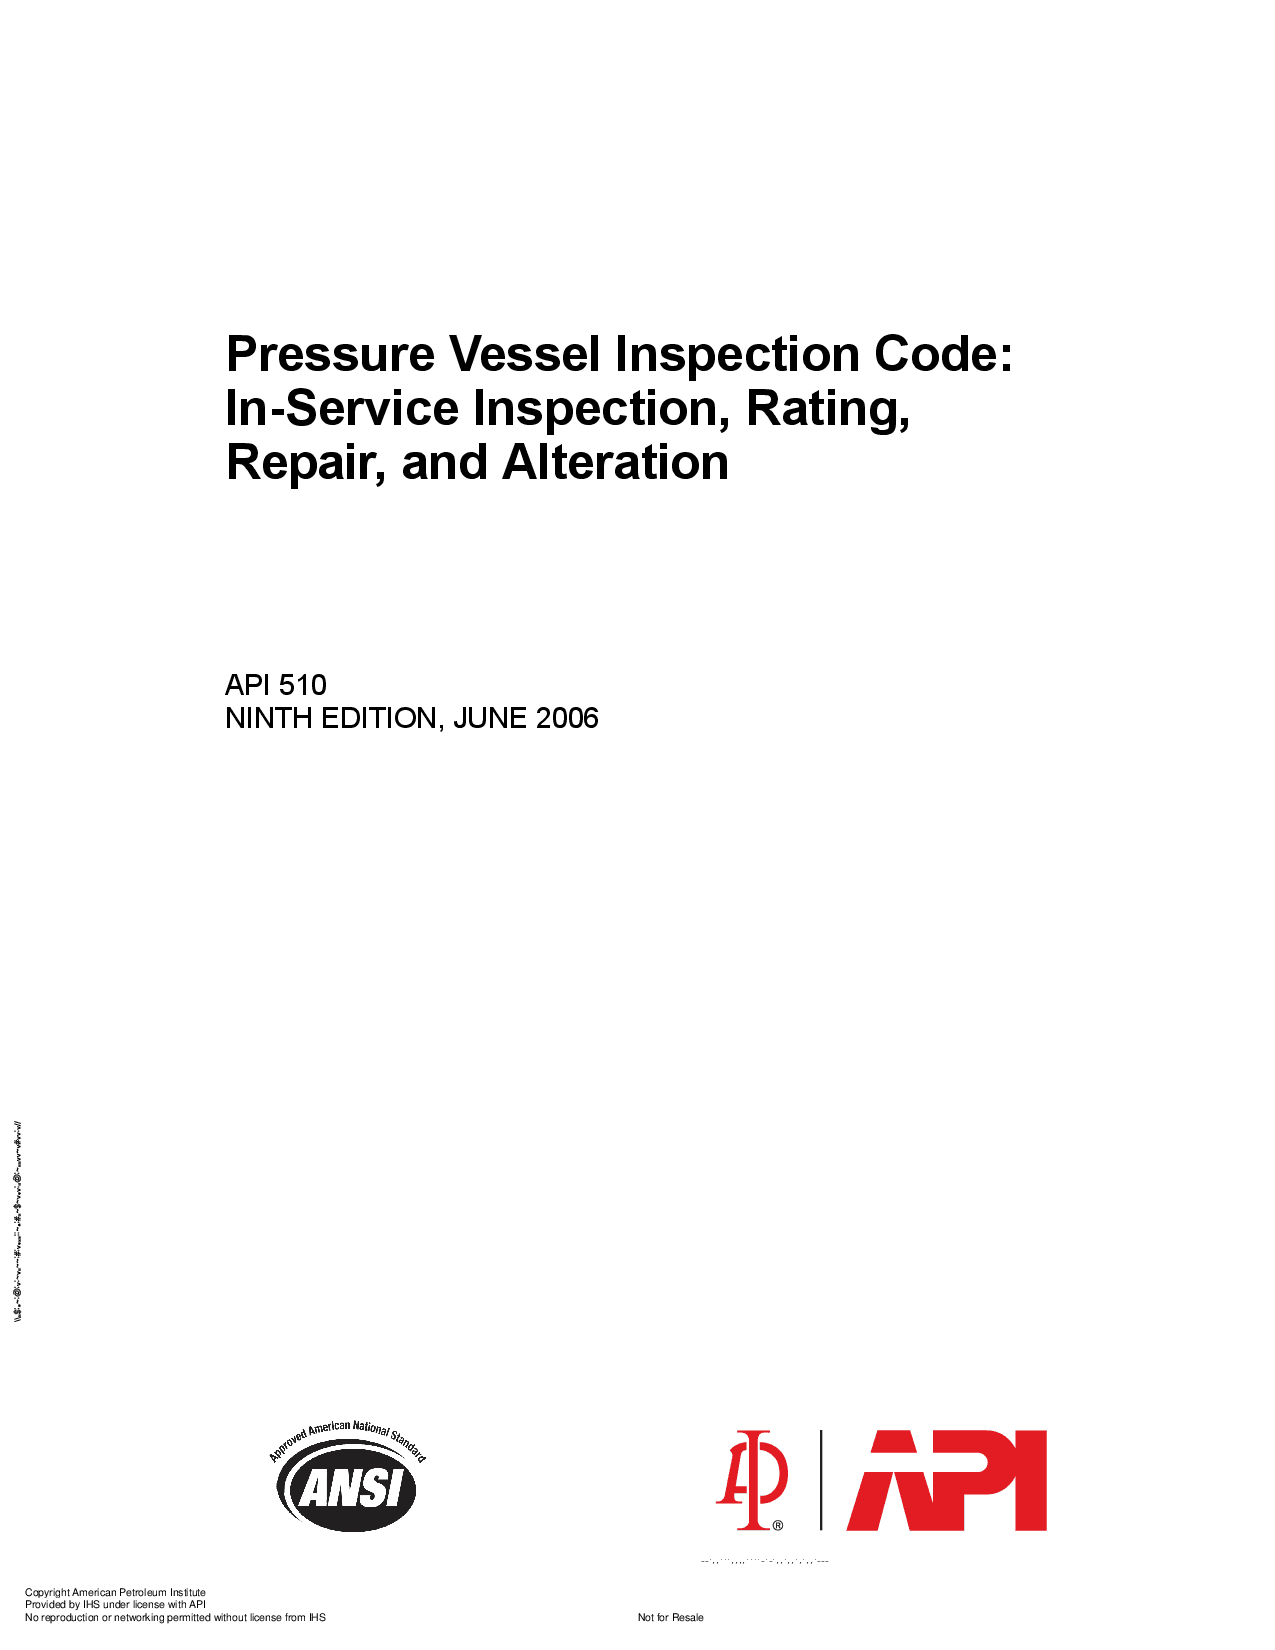 Api 510 – Pressure Vessel Inspection Code – Pressure Vessel With Hydrostatic Pressure Test Report Template